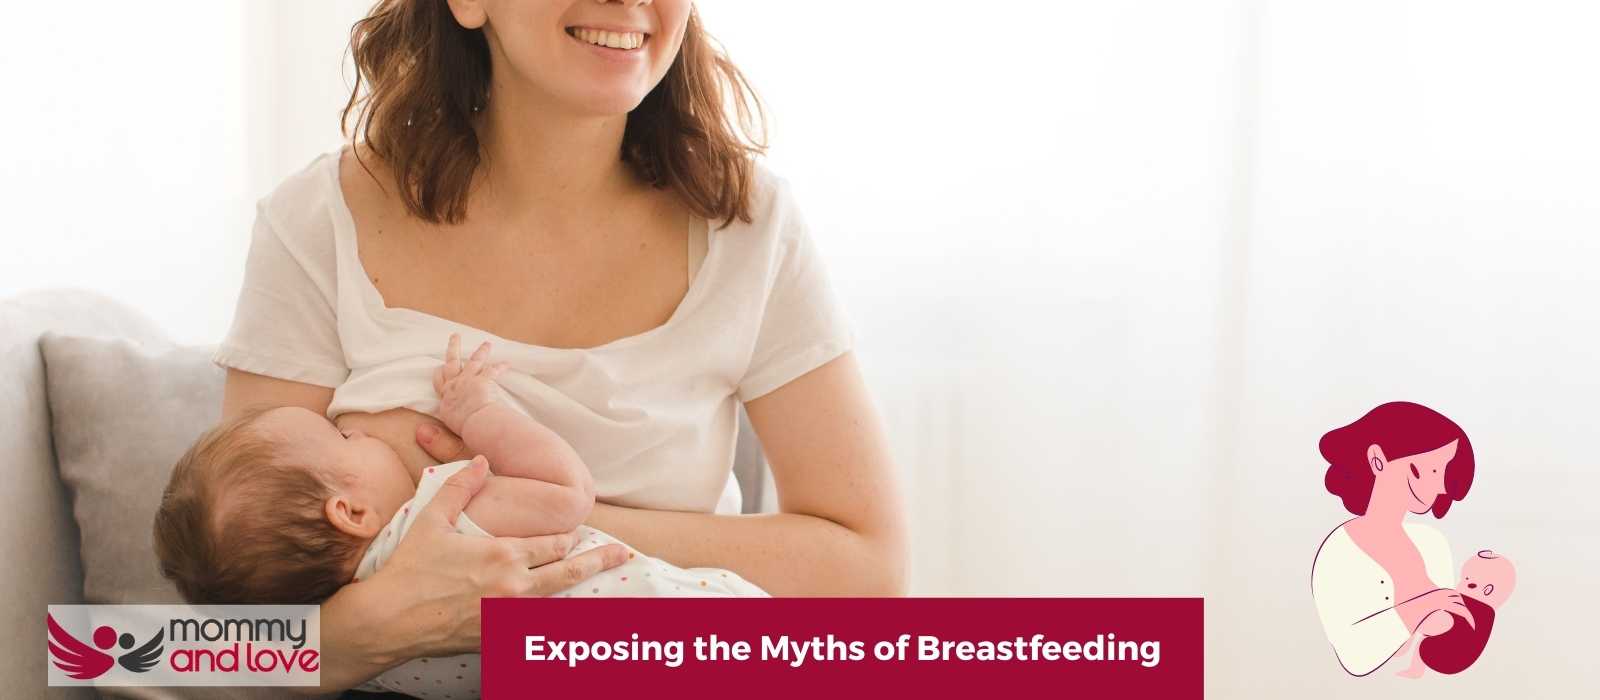 Exposing the Myths of Breastfeeding